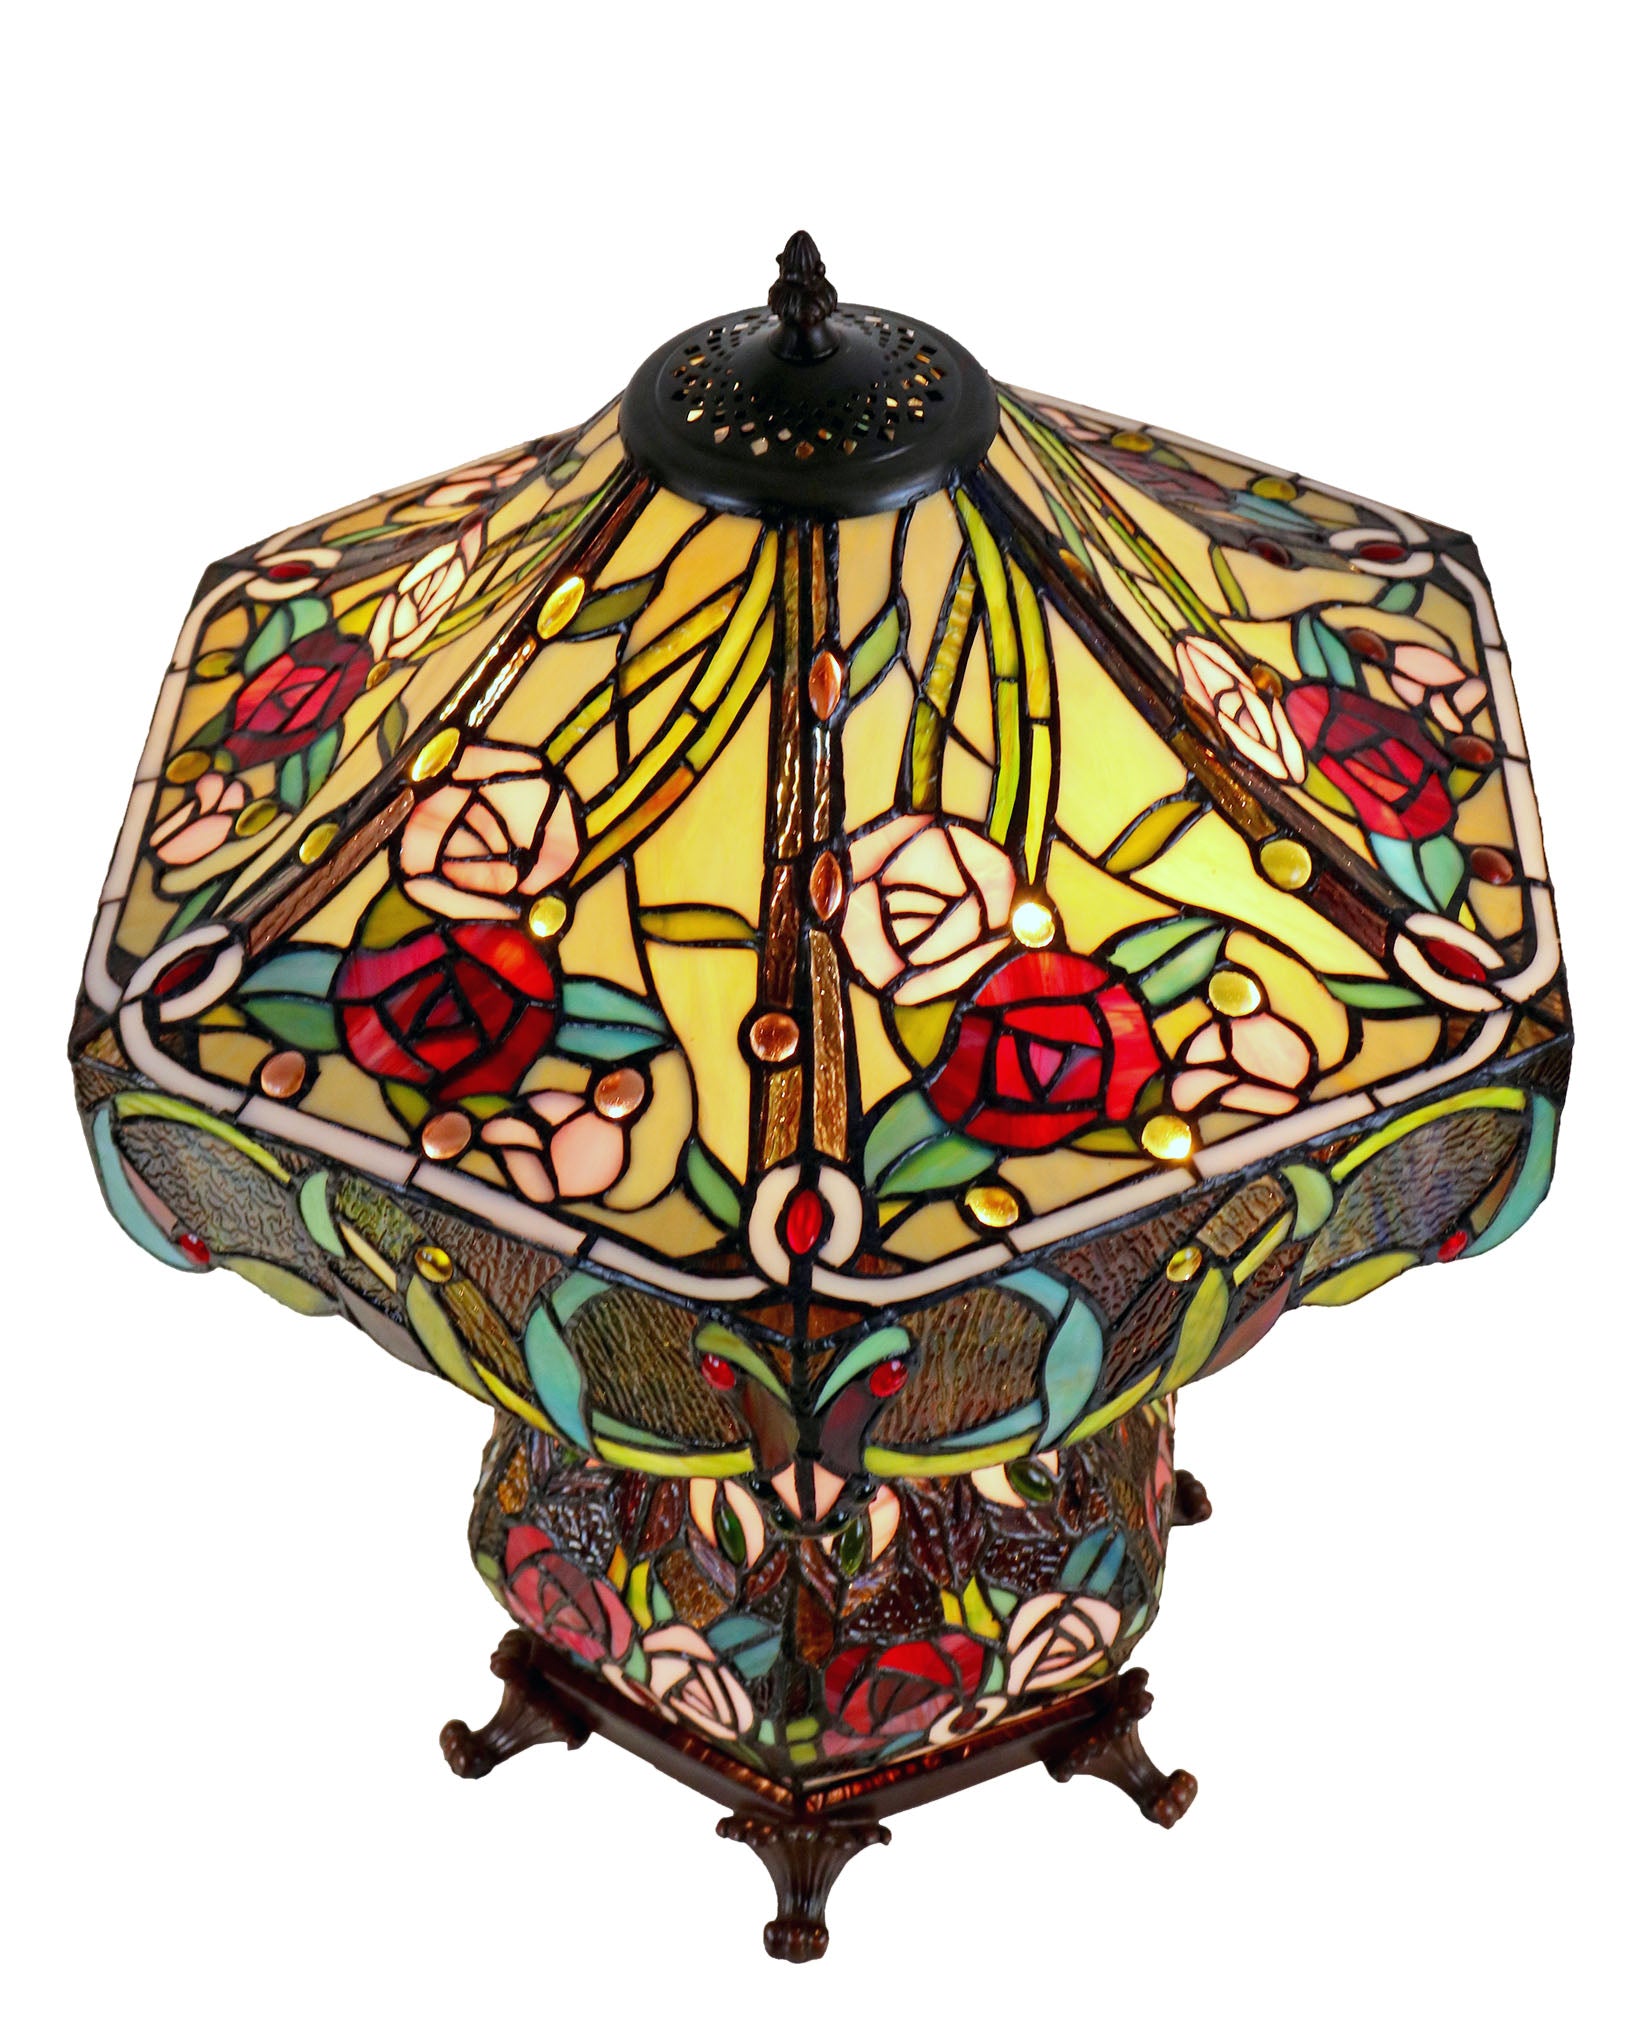 Large 18" Amazing Rose Flower Leaf  Tiffany Table Lamp with Lighted Base